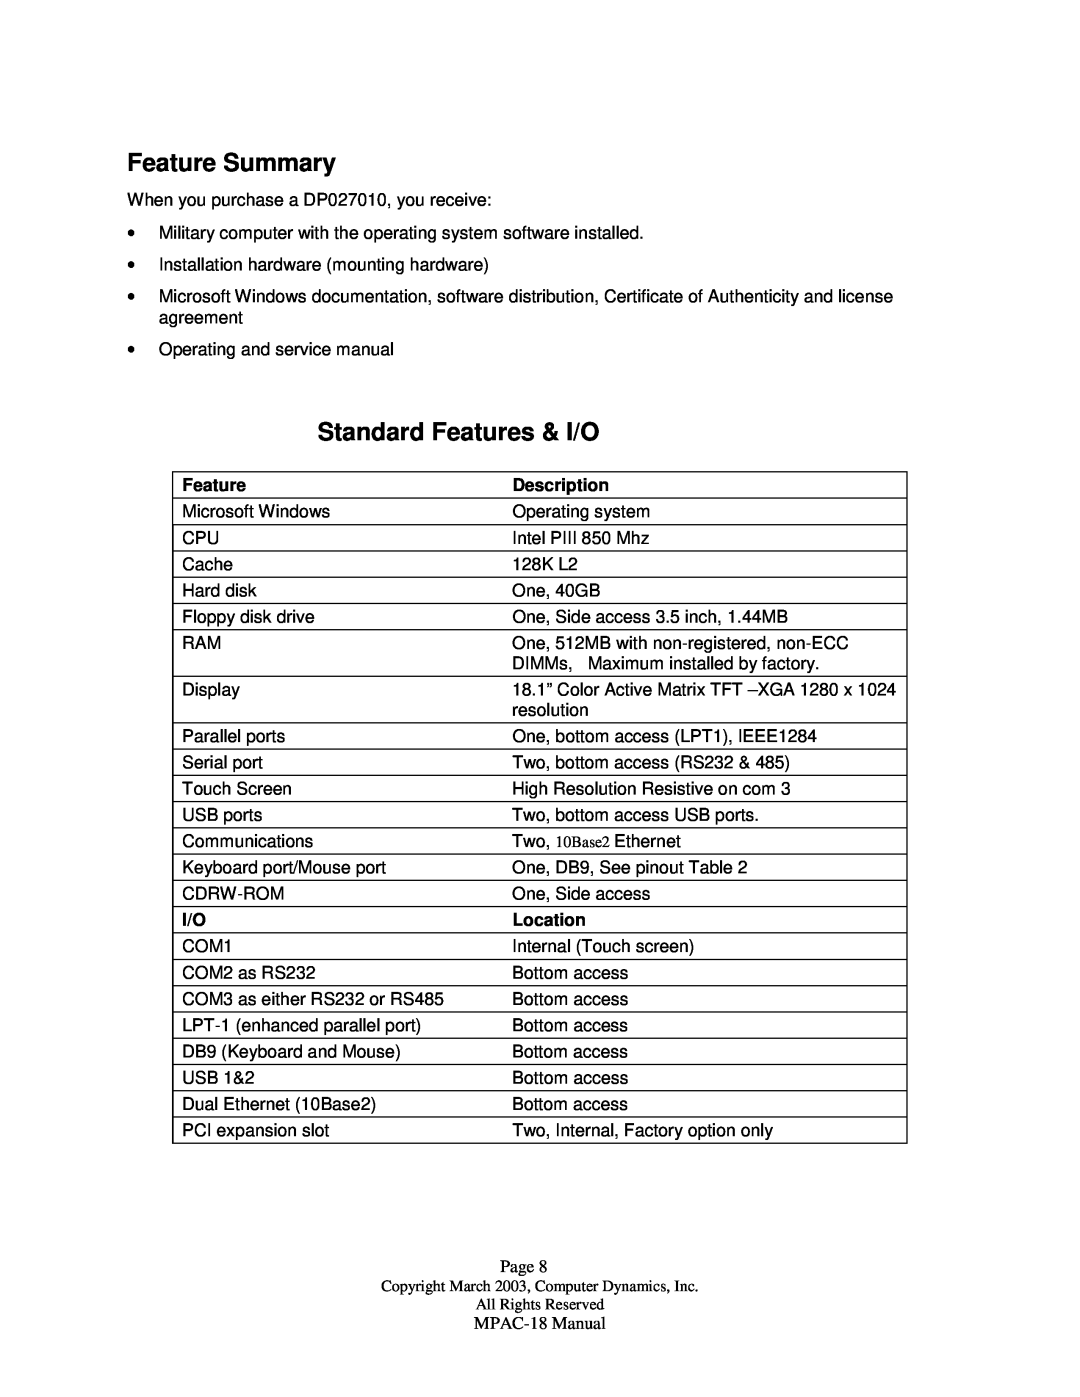 Compaq MPAC-18 manual Feature Summary, Standard Features & I/O, Description, Location 